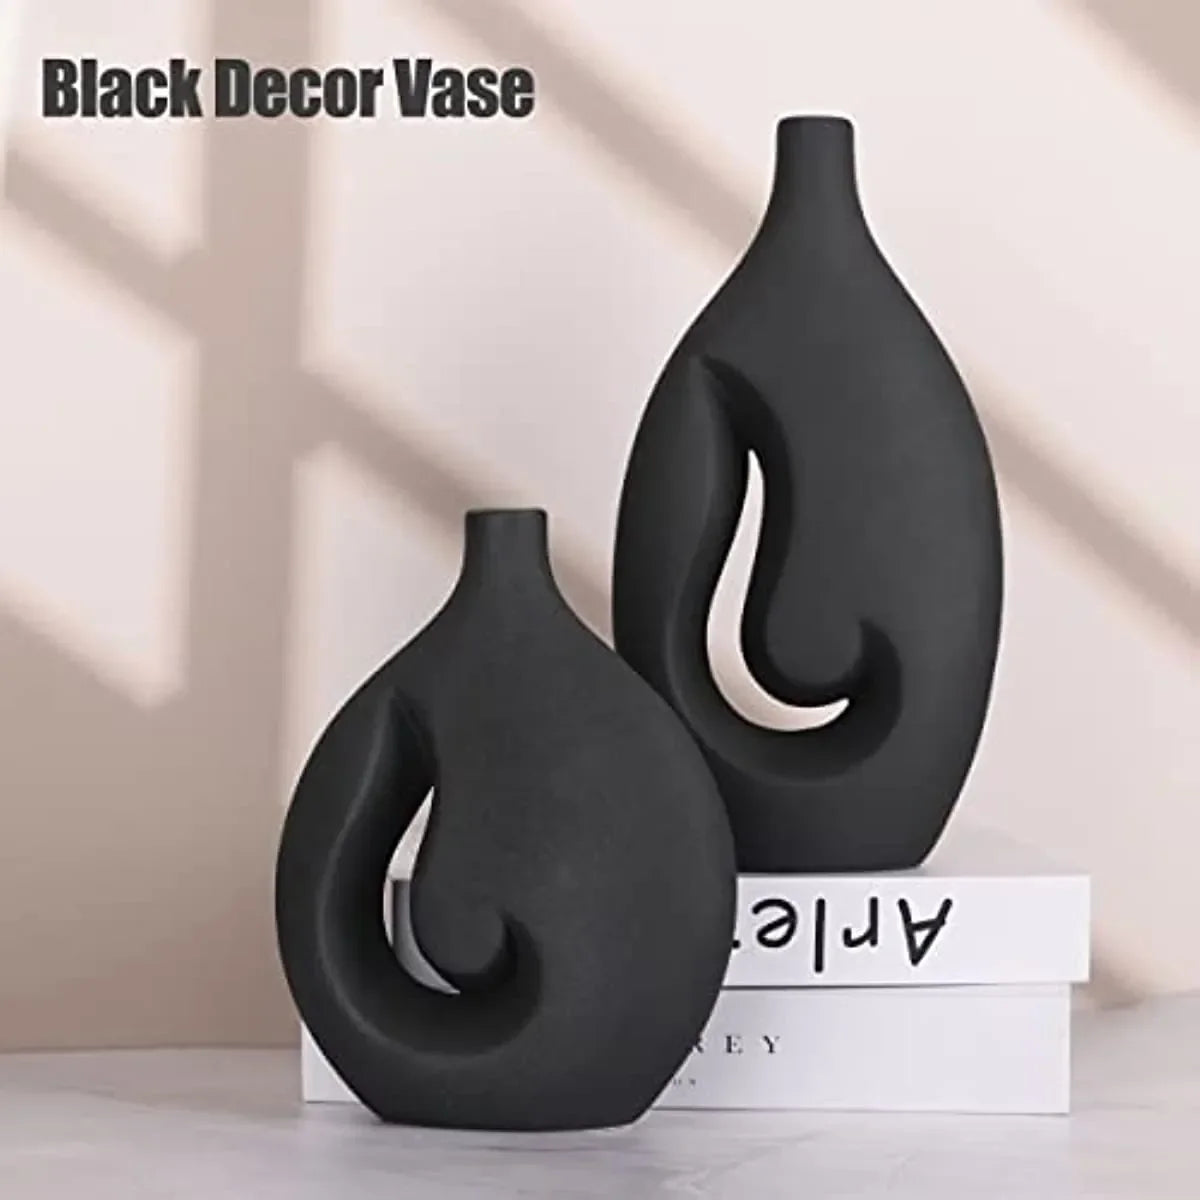 Black Ceramic Flame Hollow Vases Set of 2 Modern Decorative Vase Centerpiece for Wedding Dinner Table Party Living Room Office